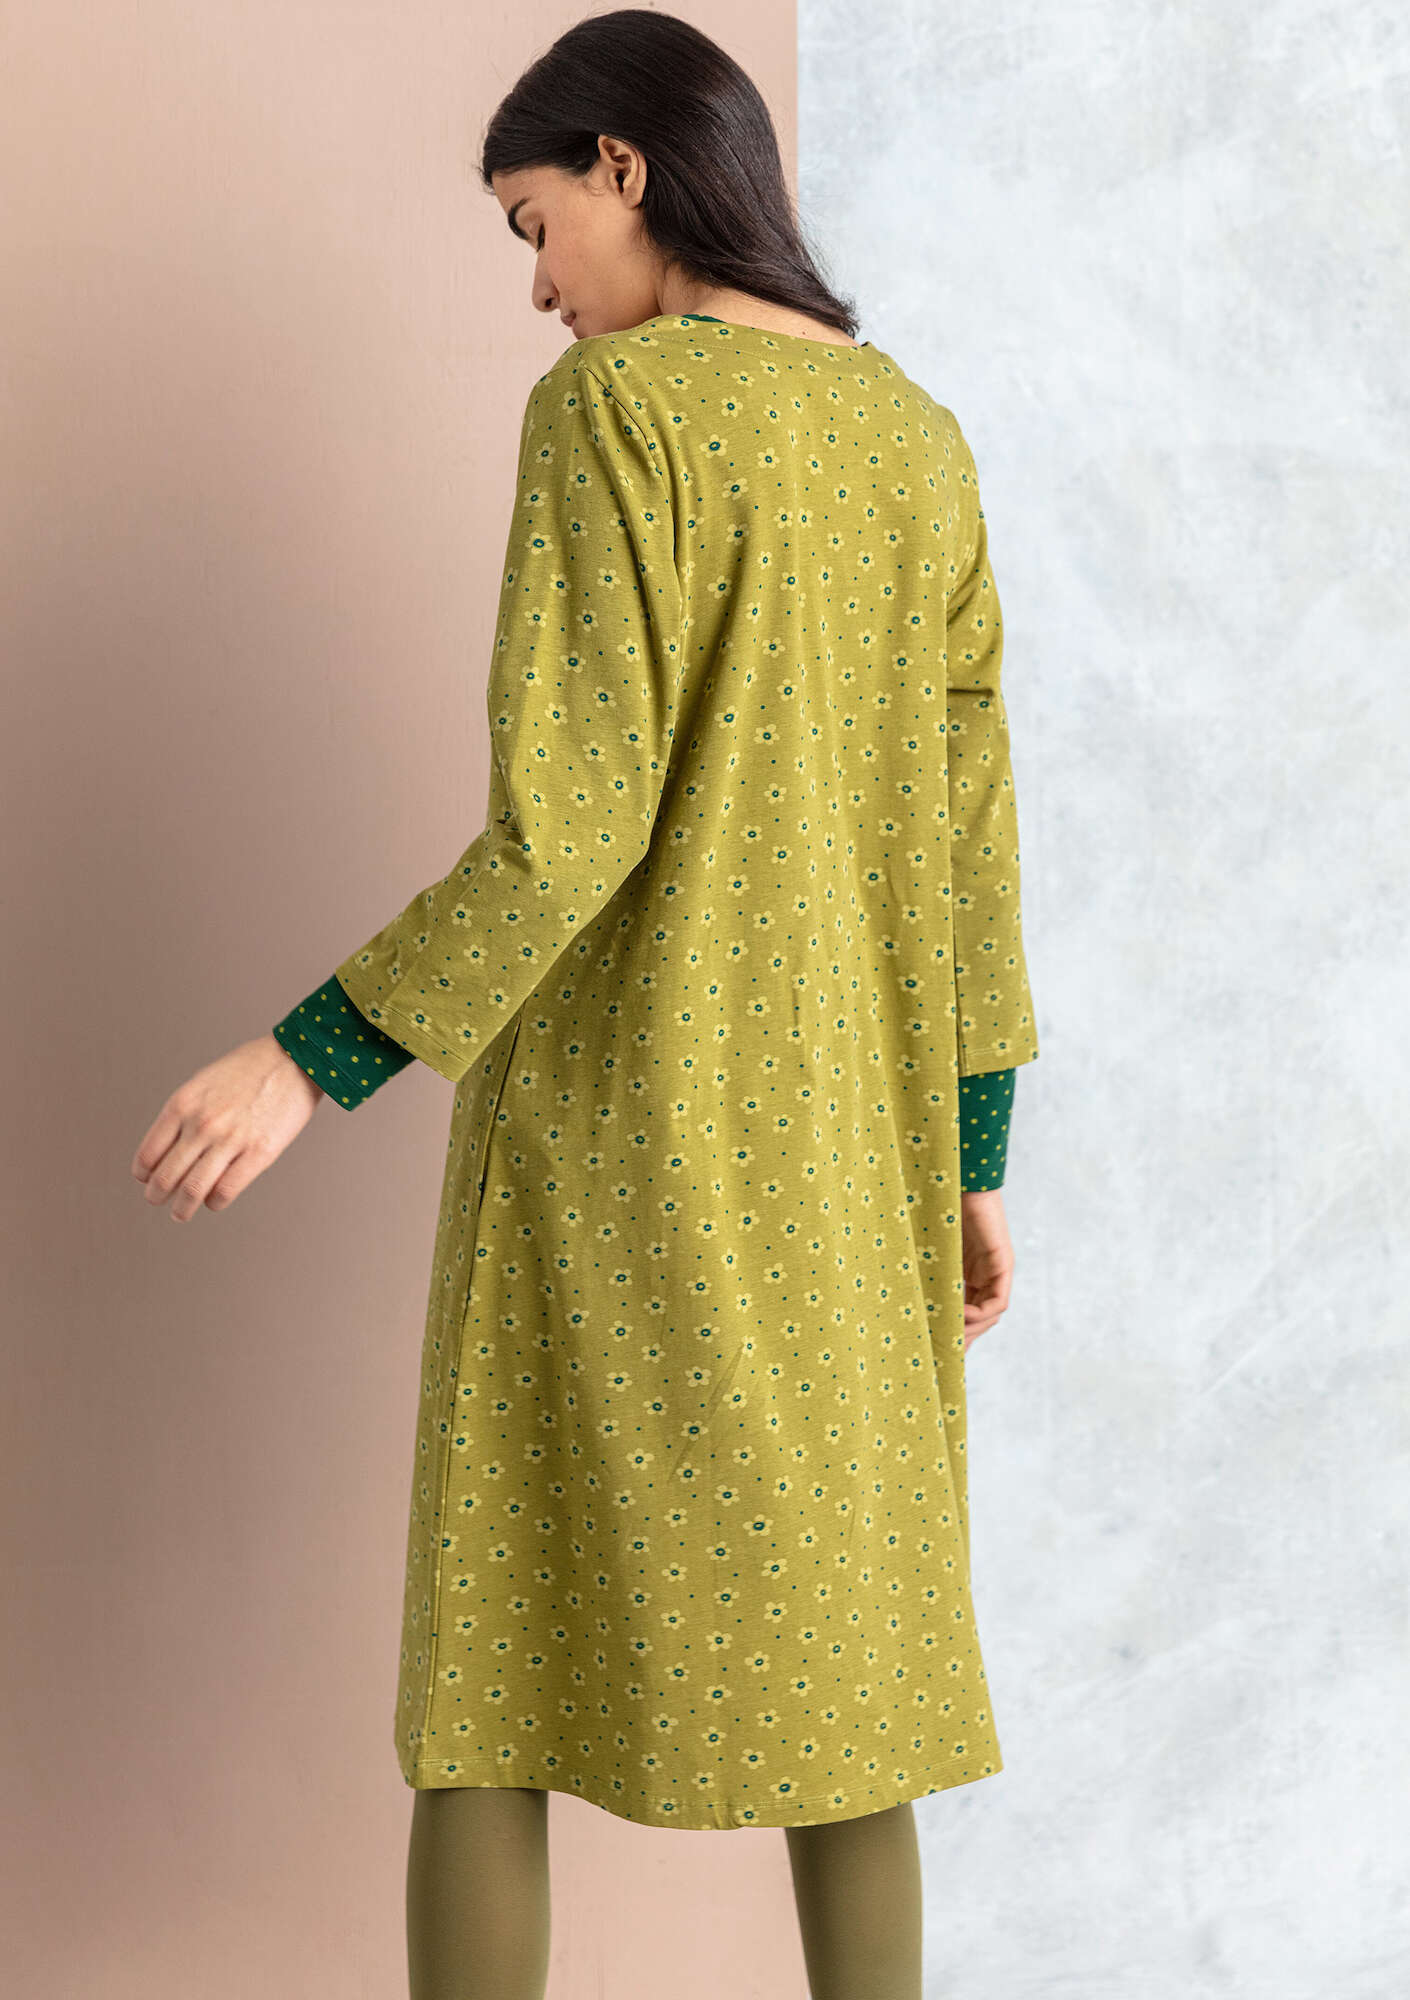 “Belle” organic cotton/elastane jersey dress avocado/patterned thumbnail